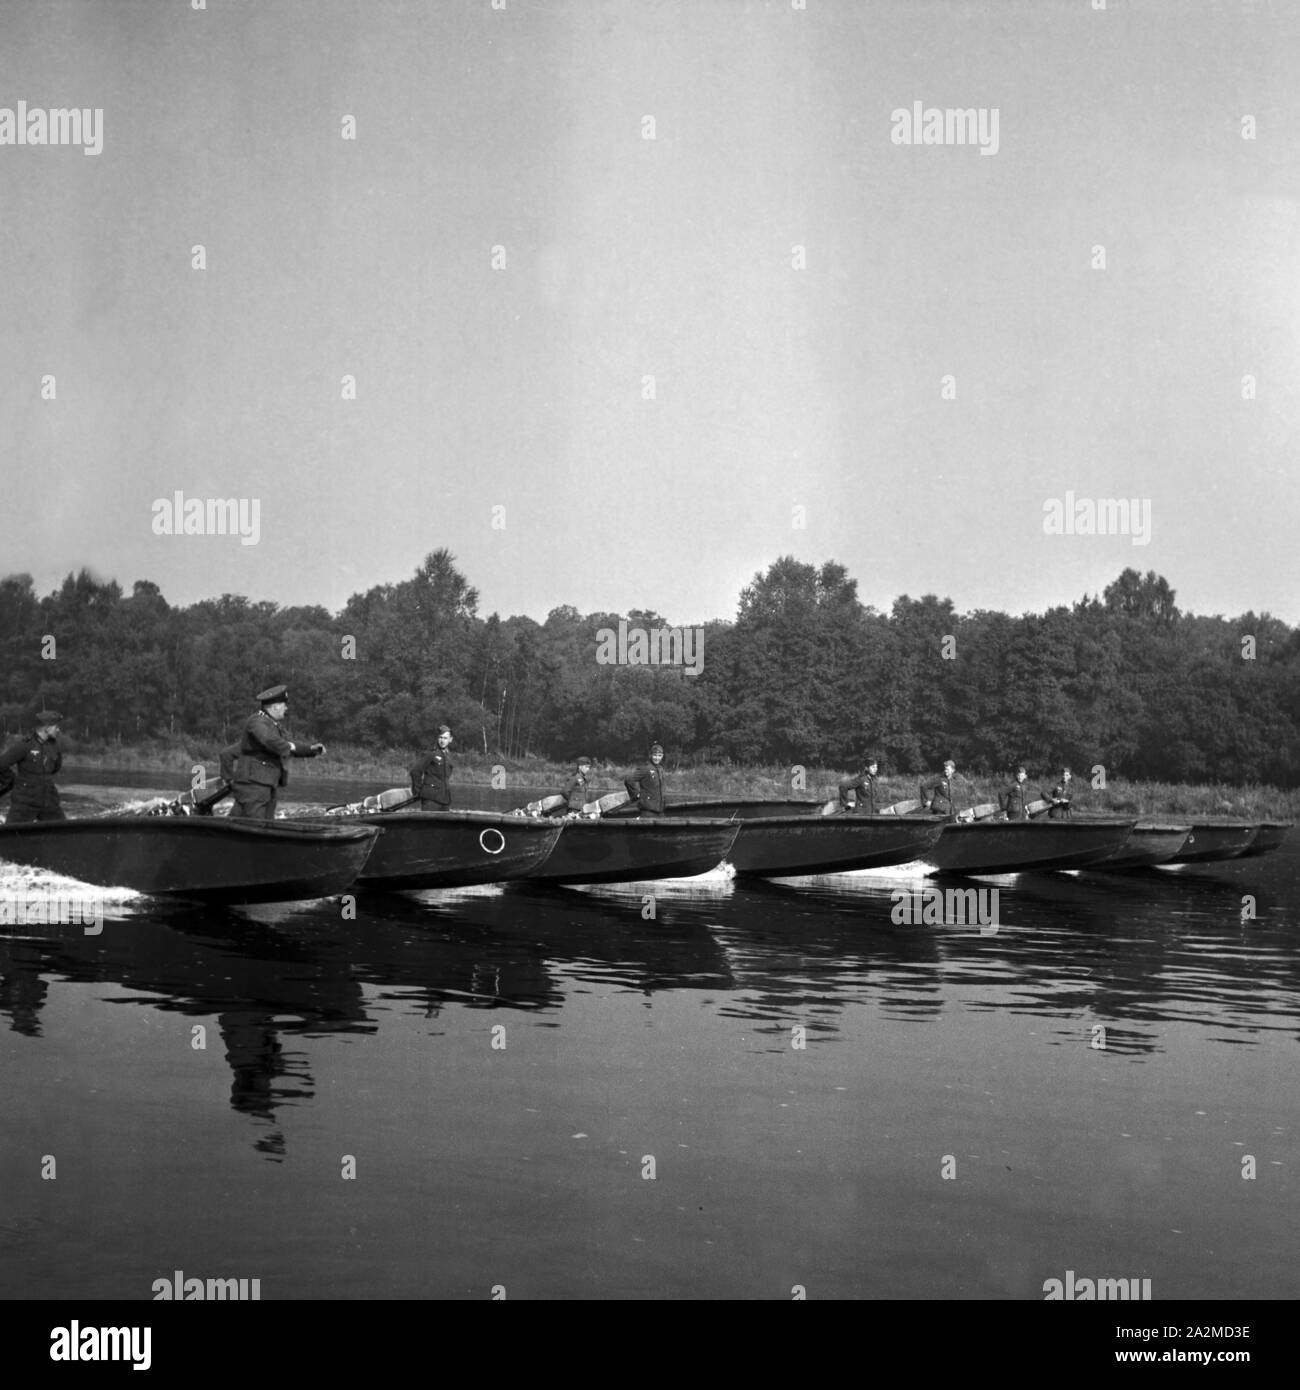 Original-Bildunterschrift: Pionier-Sturmboote fahren Übungen, Deutschland 1940er Jahre. Engineering unit's storm boats exercising, Germany 1940s. Stock Photo